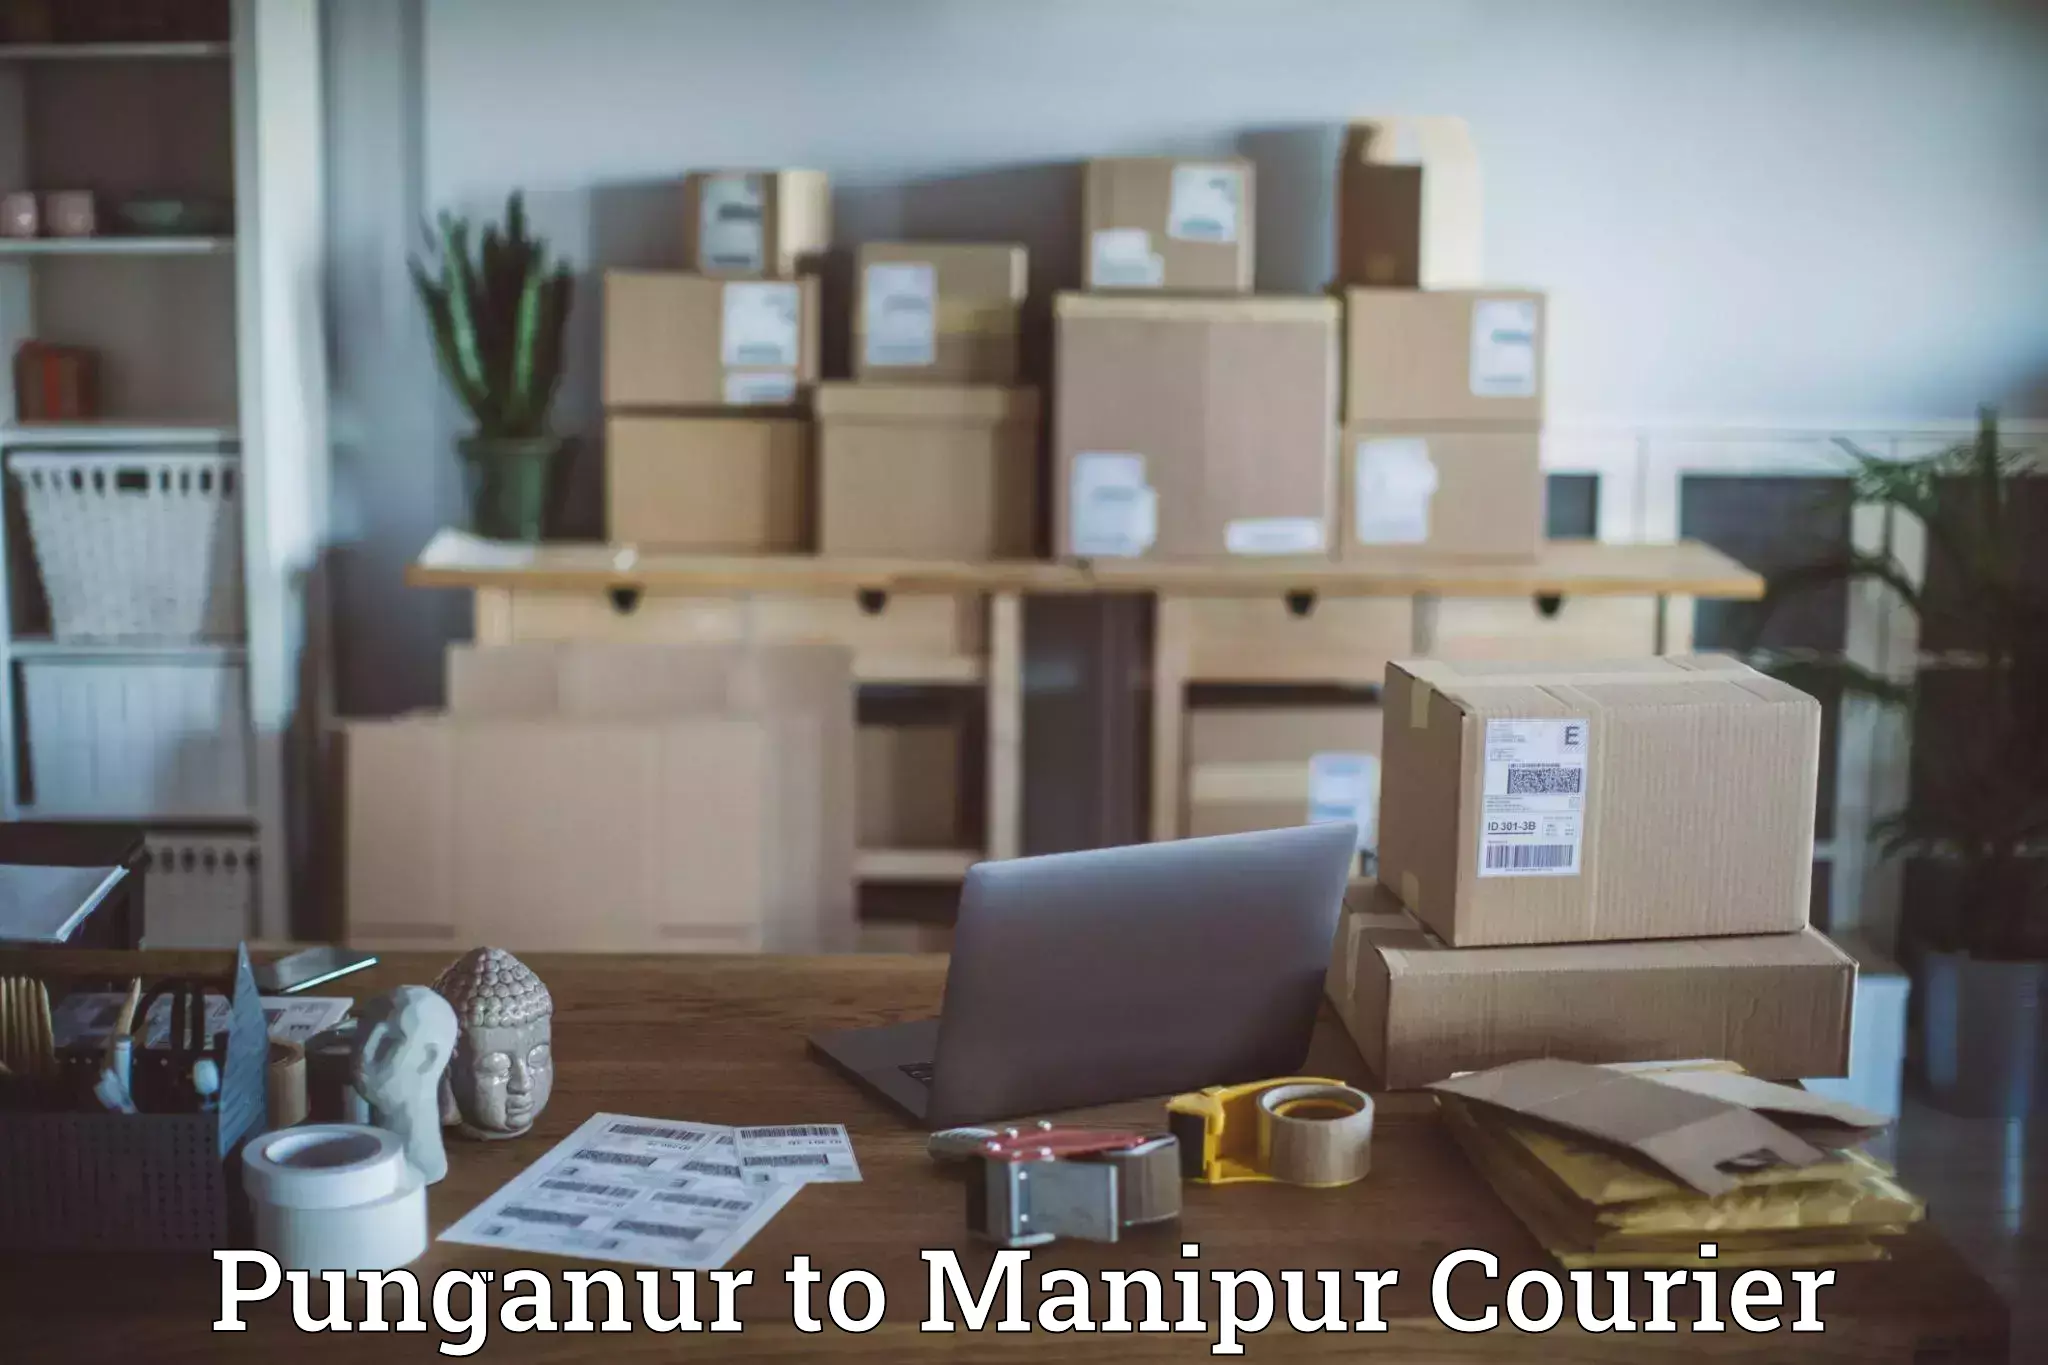 Enhanced tracking features Punganur to Manipur